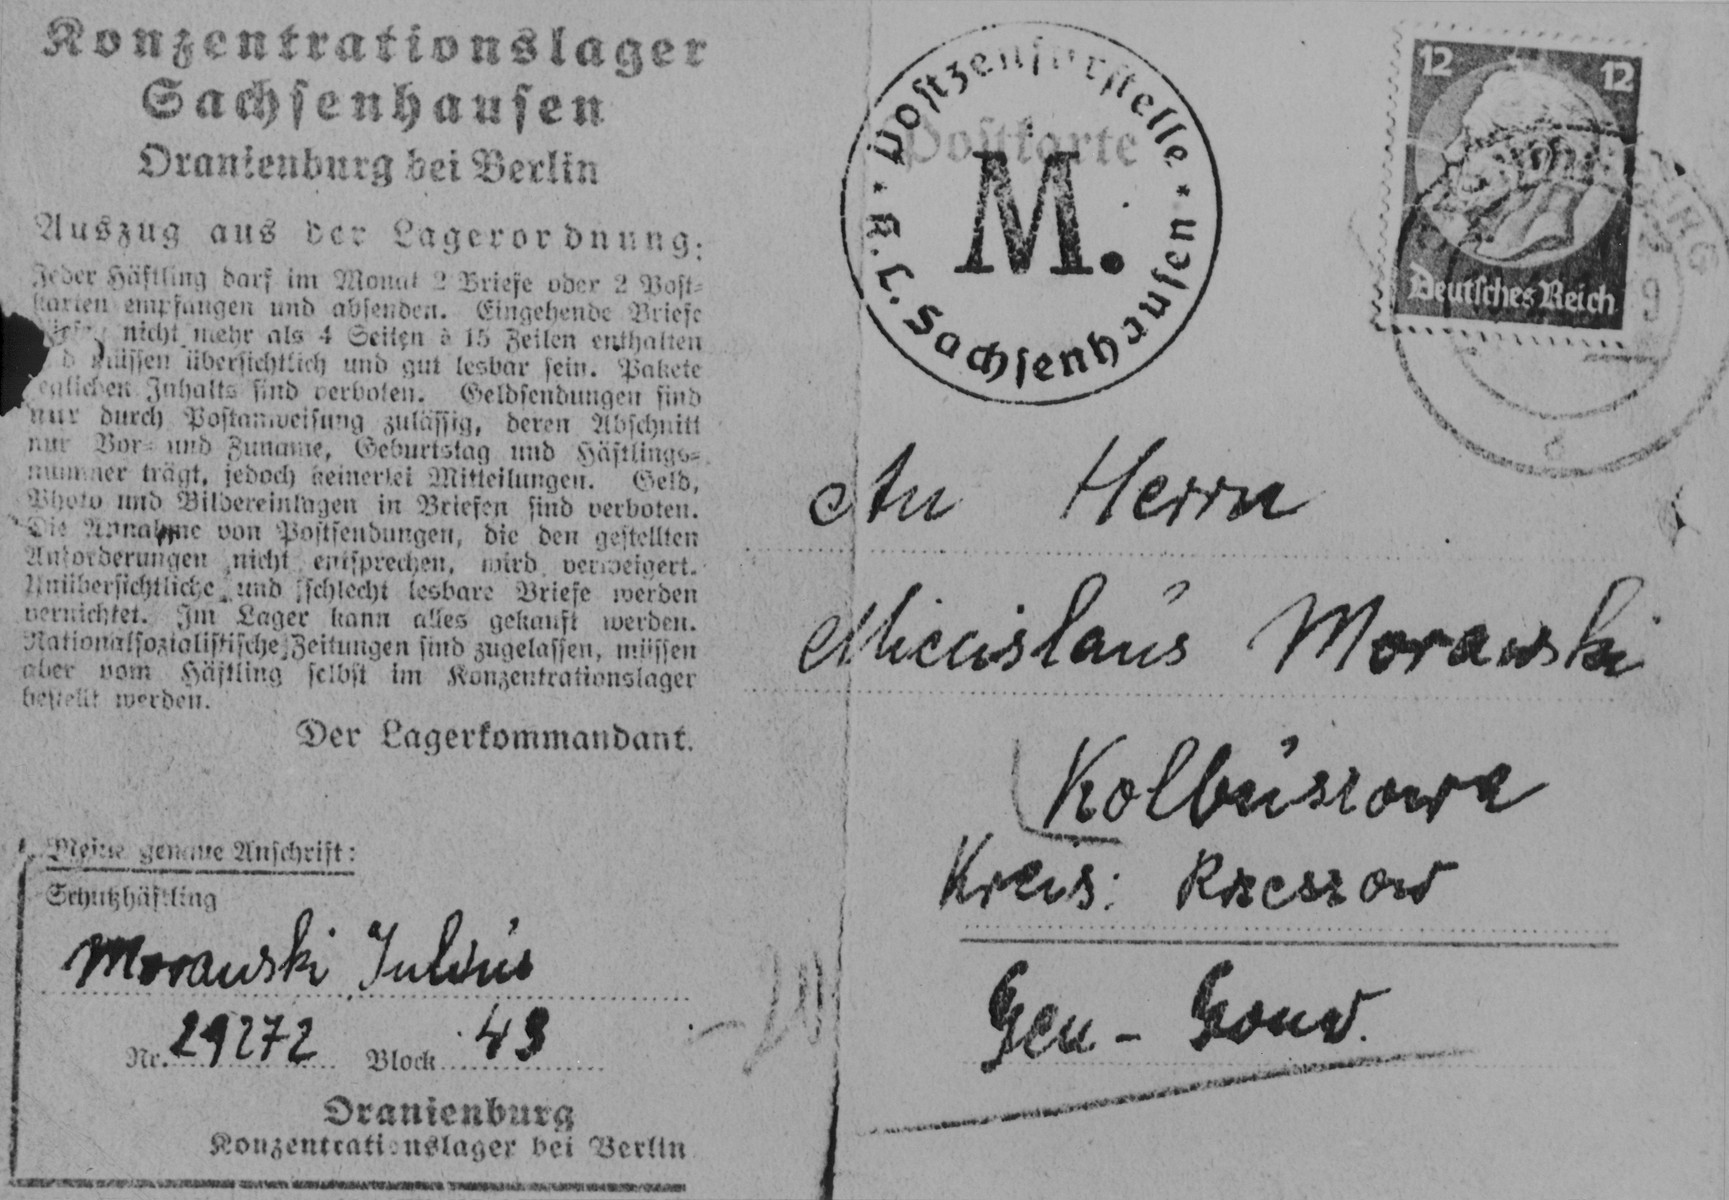 A postcard sent from Julius Morawski in Oranienburg to Miecislaus Morawski in Kolbuszowa.